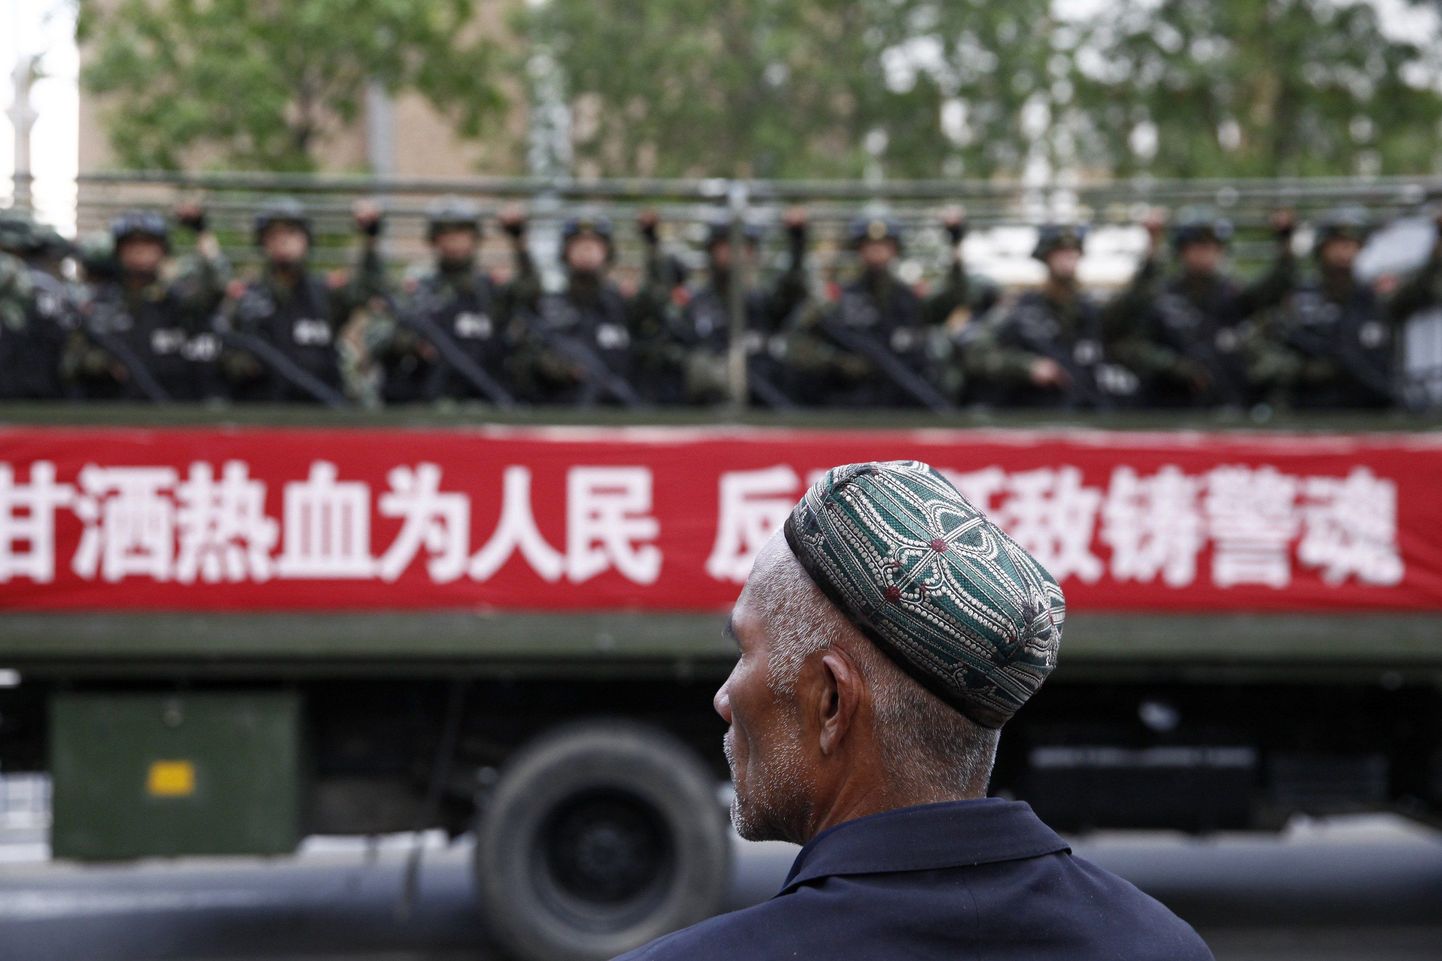 Uiguuri mees vaatamas mööduvat veokitäit Hiina politsei eriüksuslasi.